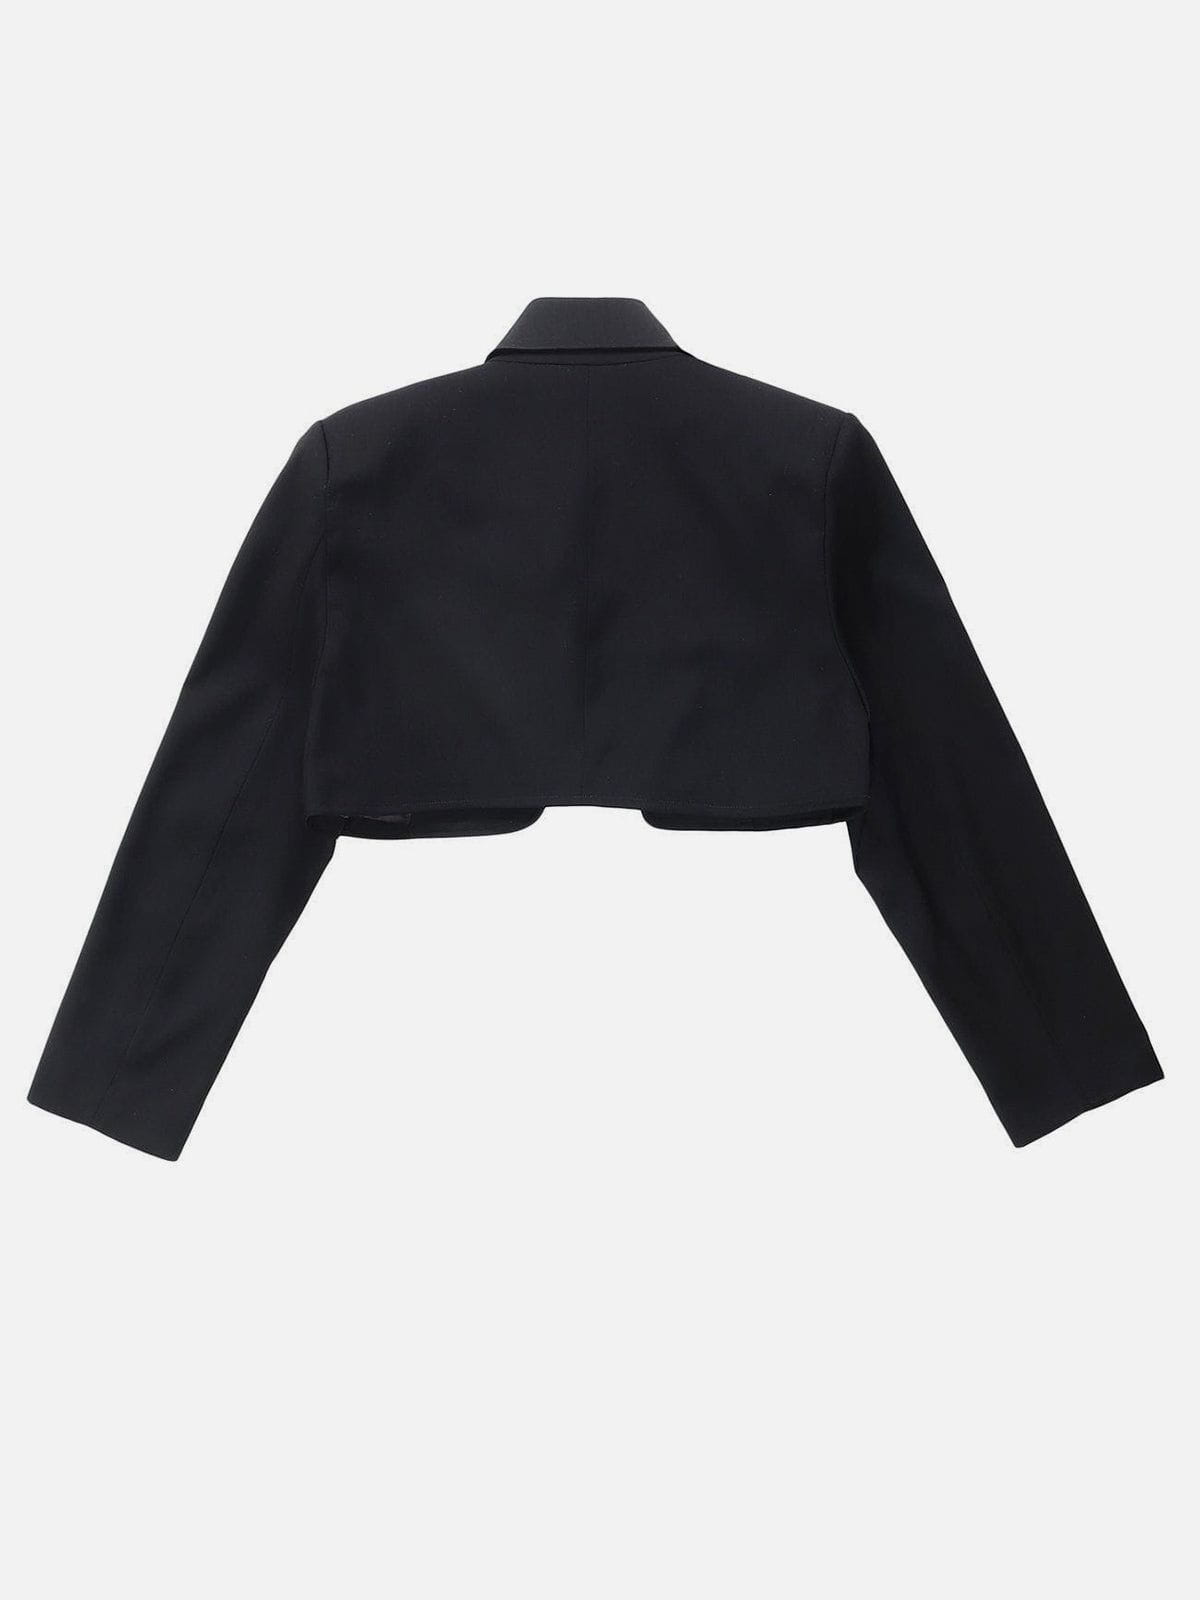 Majesda® - Small Blazer Belted Jacket outfit ideas, streetwear fashion - majesda.com